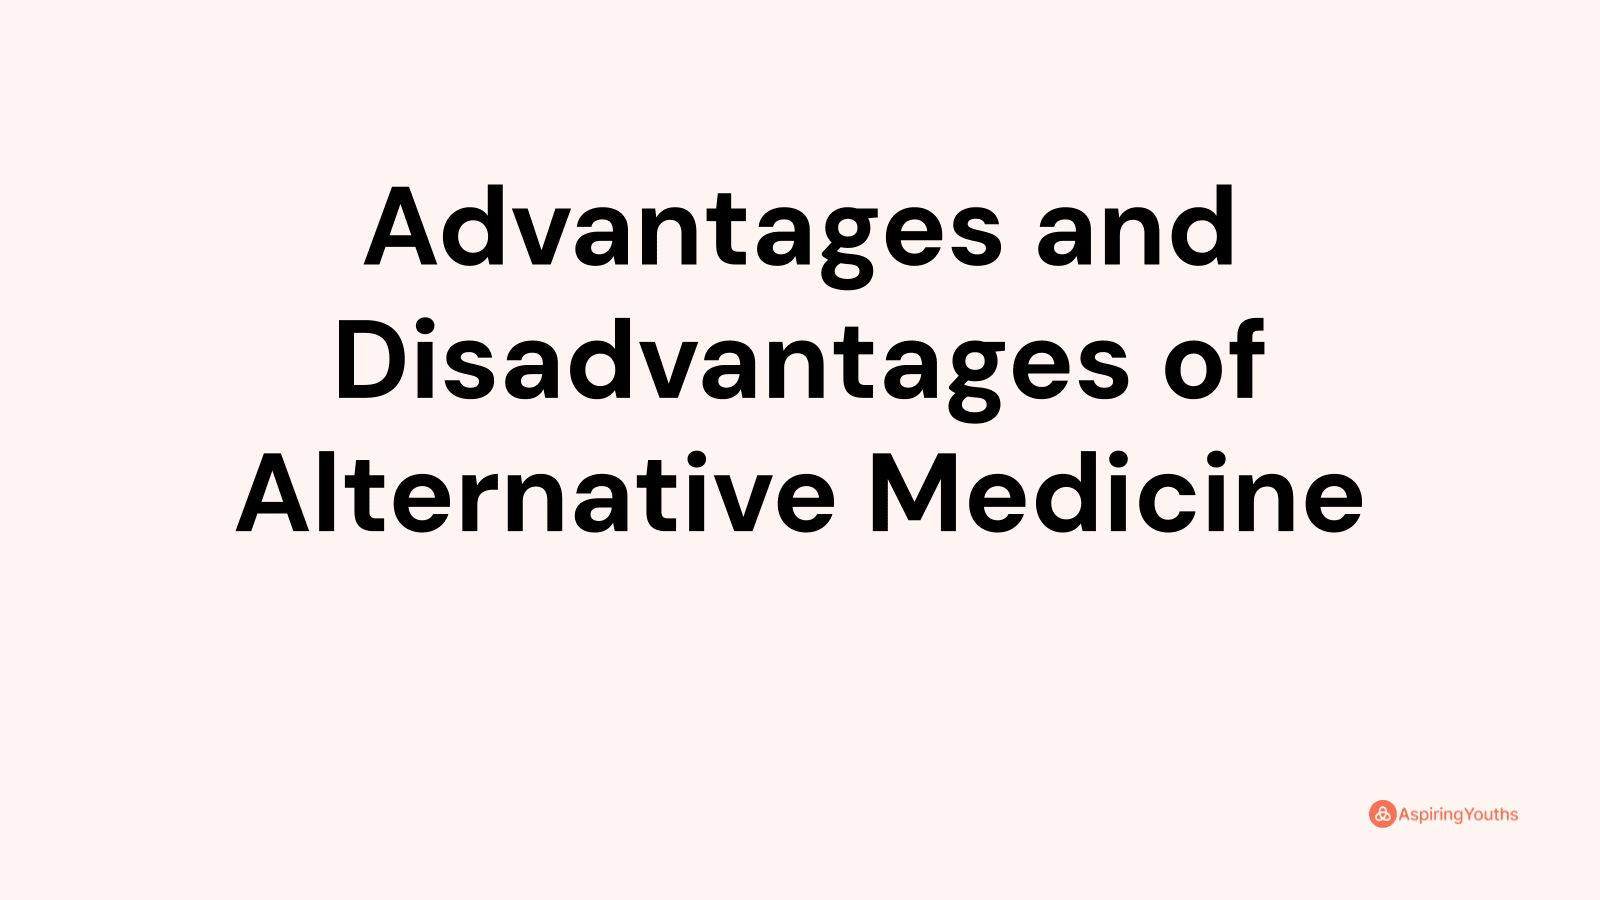 Advantages and disadvantages of Alternative Medicine